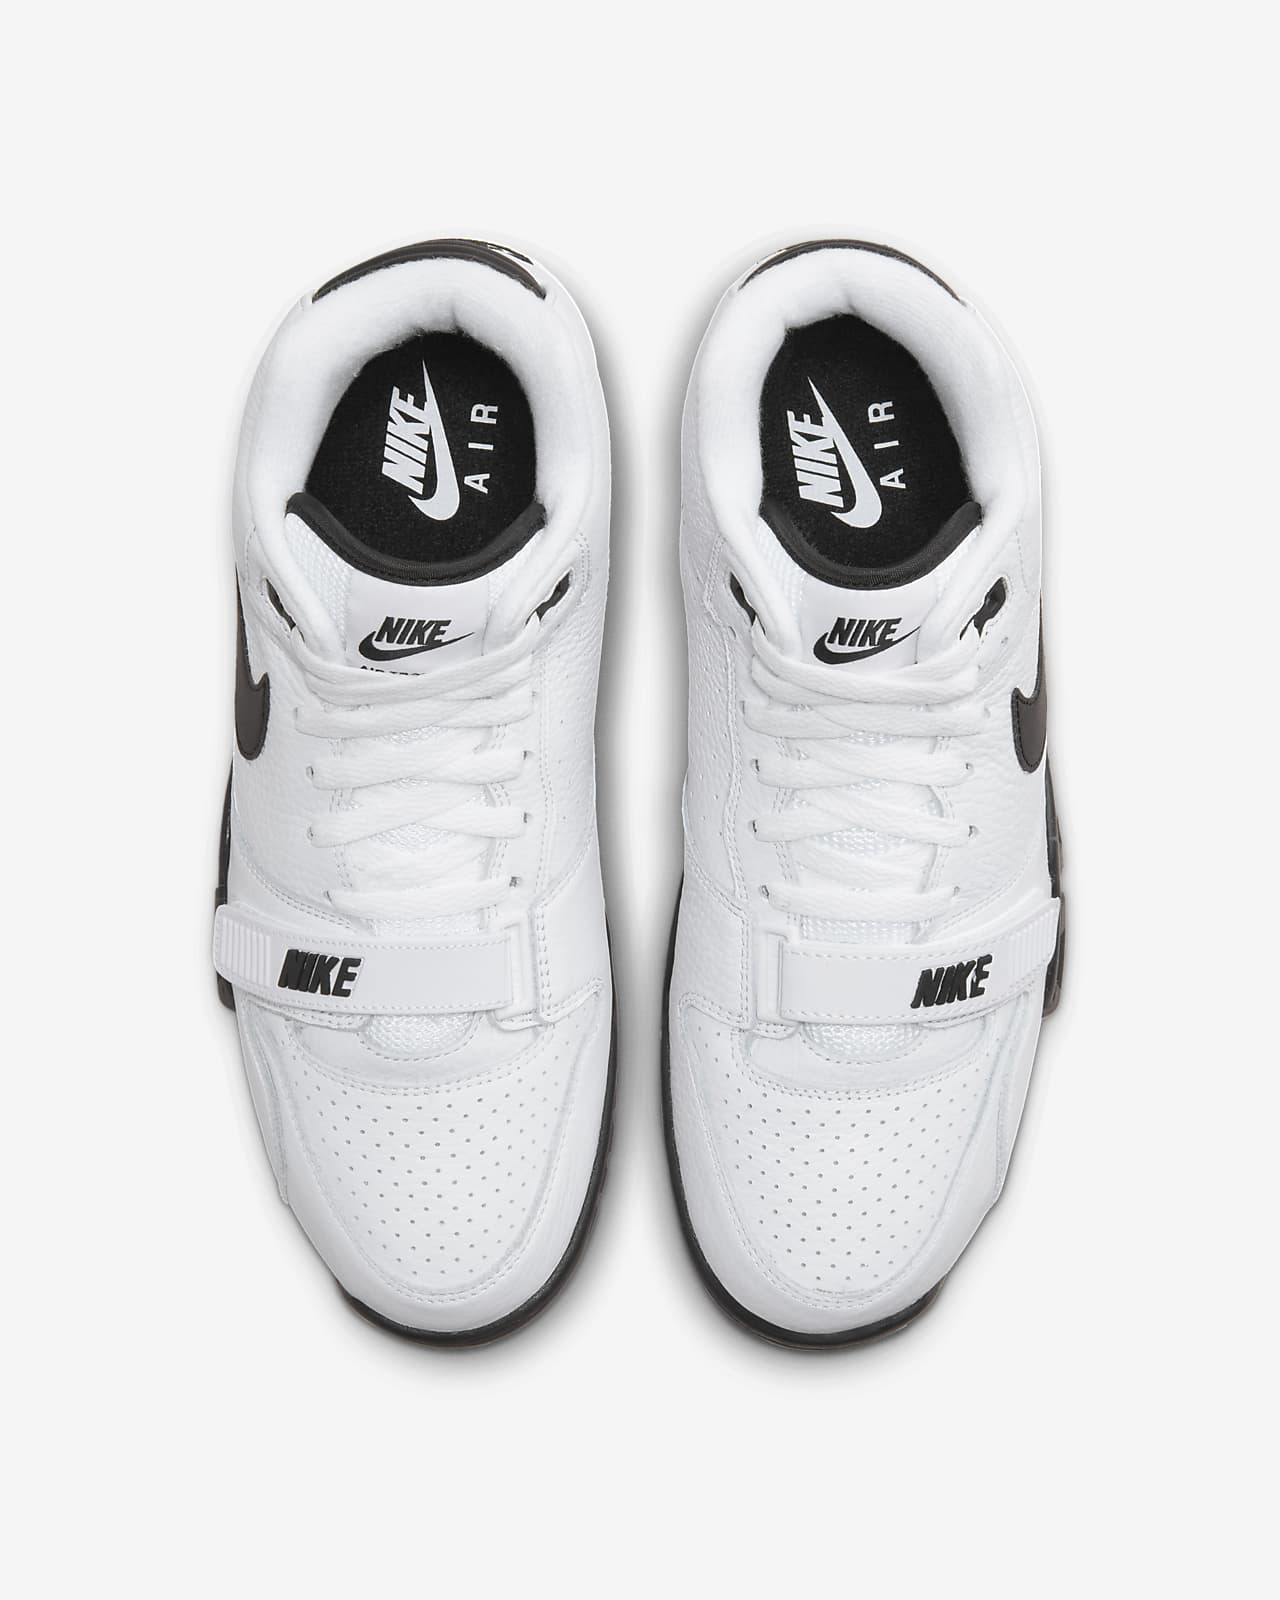 Nike Air 1 Men's Shoes.